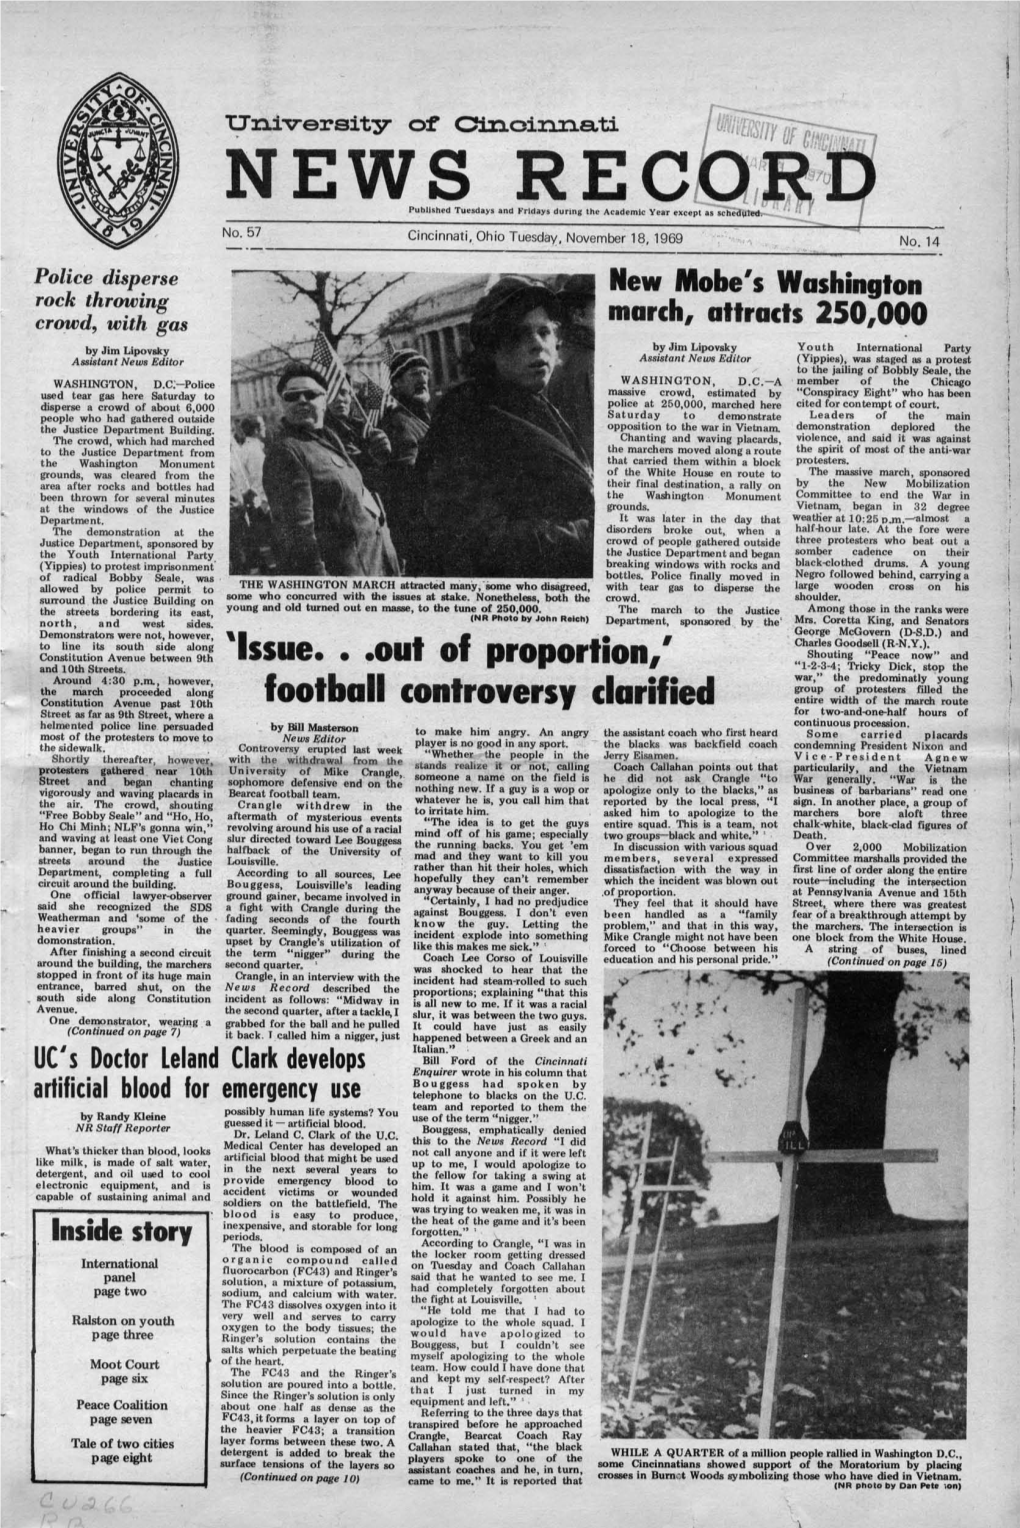 University of Cincinnati News Record. Tuesday, November 18, 1969. Vol